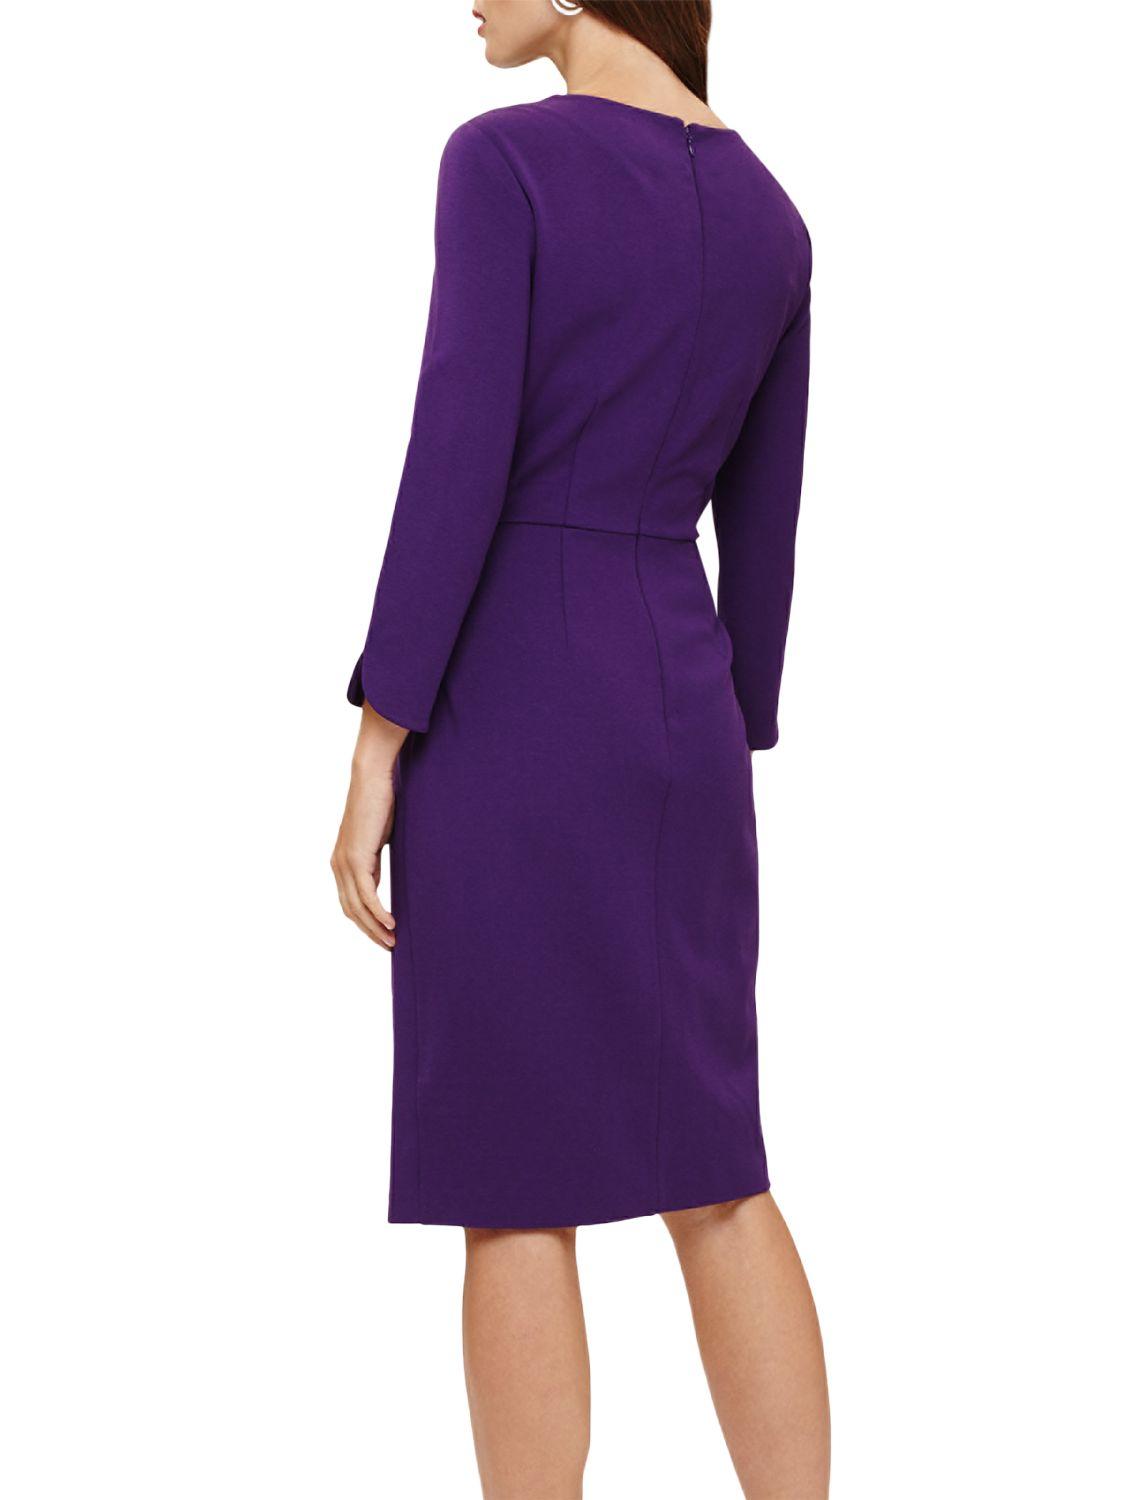 phase eight leanna dress purple